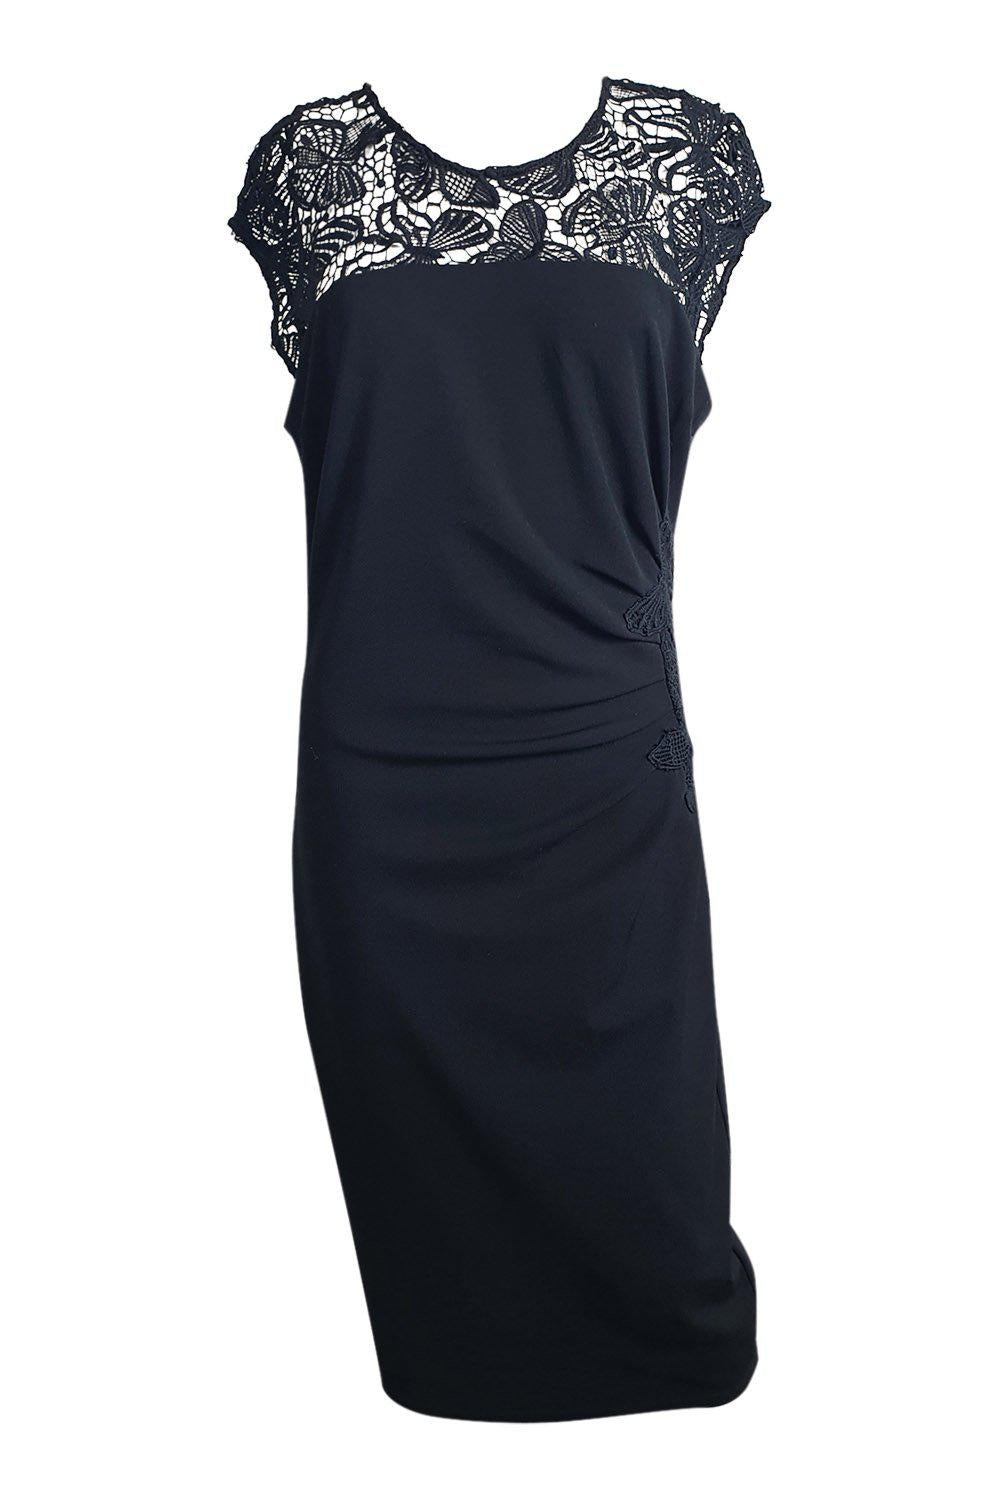 HALE BOB Black Lace Trim Short Sleeved Bodycon Dress (L)-The Freperie